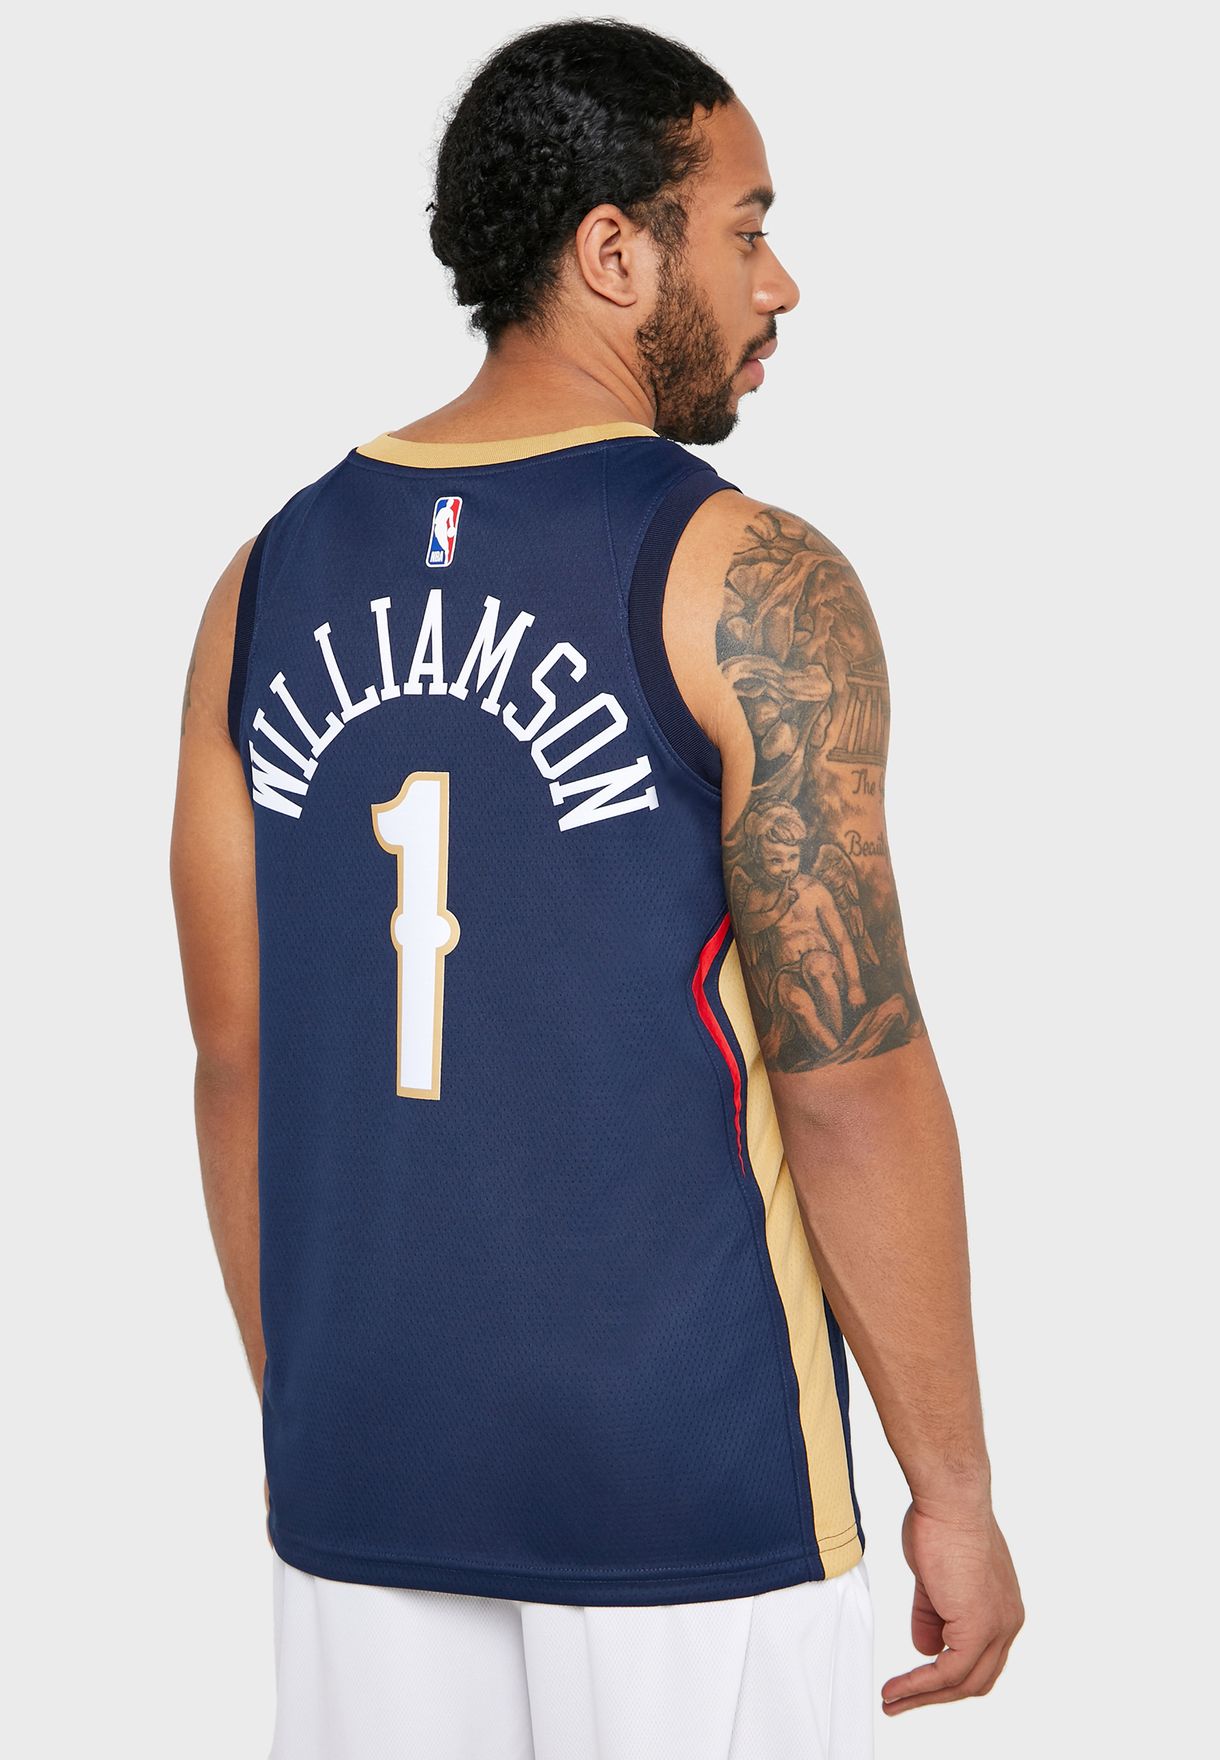 williamson jersey